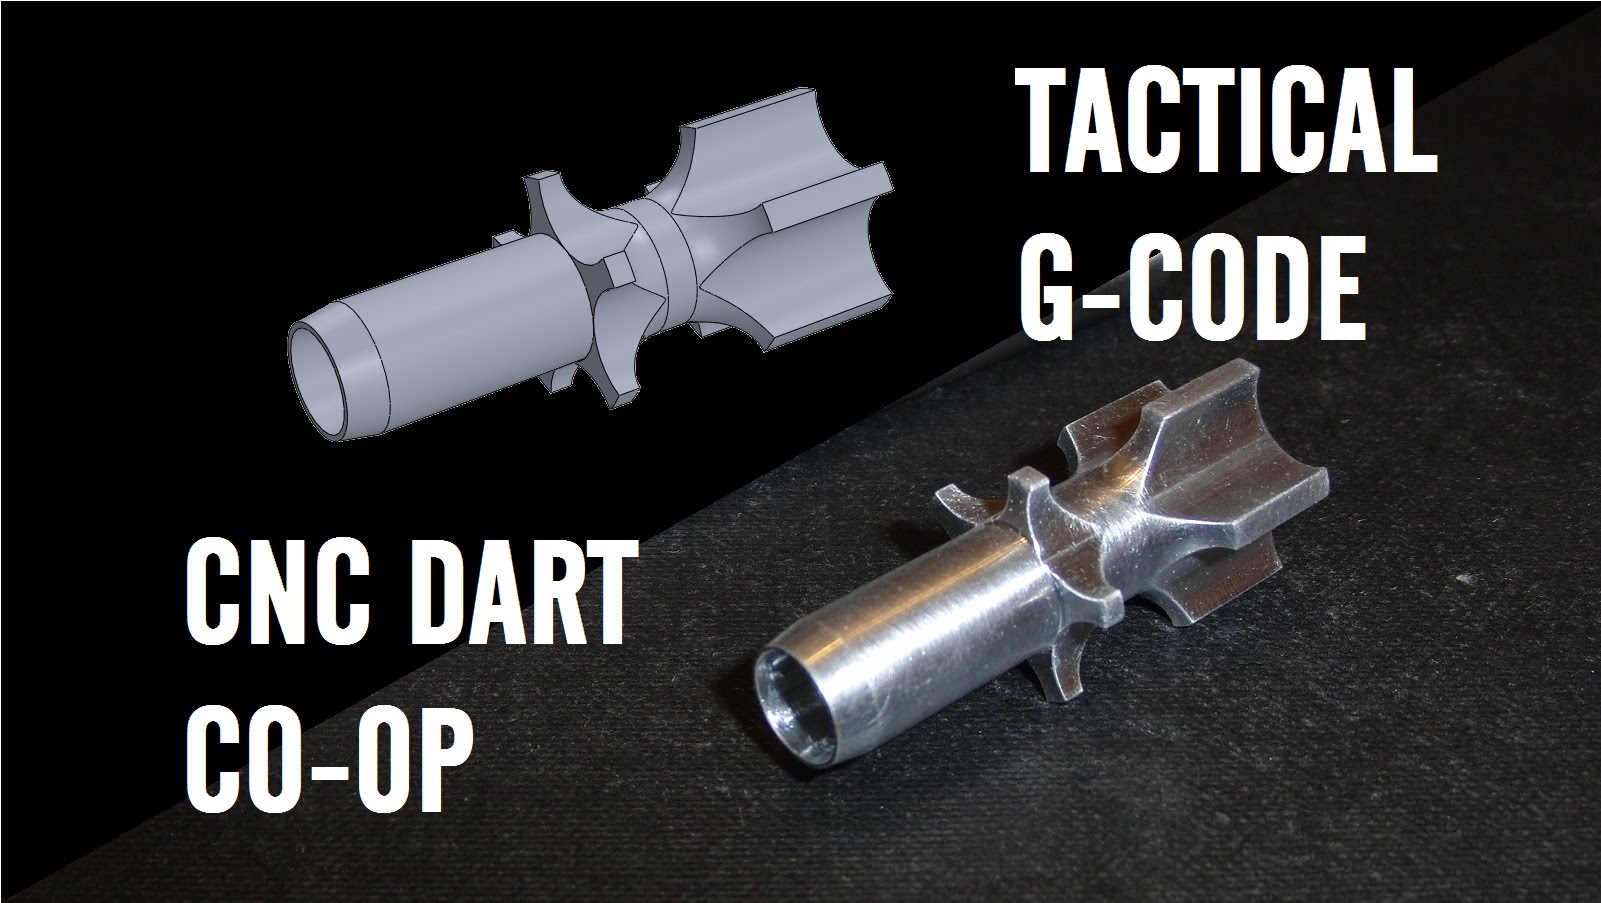 CNC shotgun dart co-op with TACTICAL G-CODE - YouTube